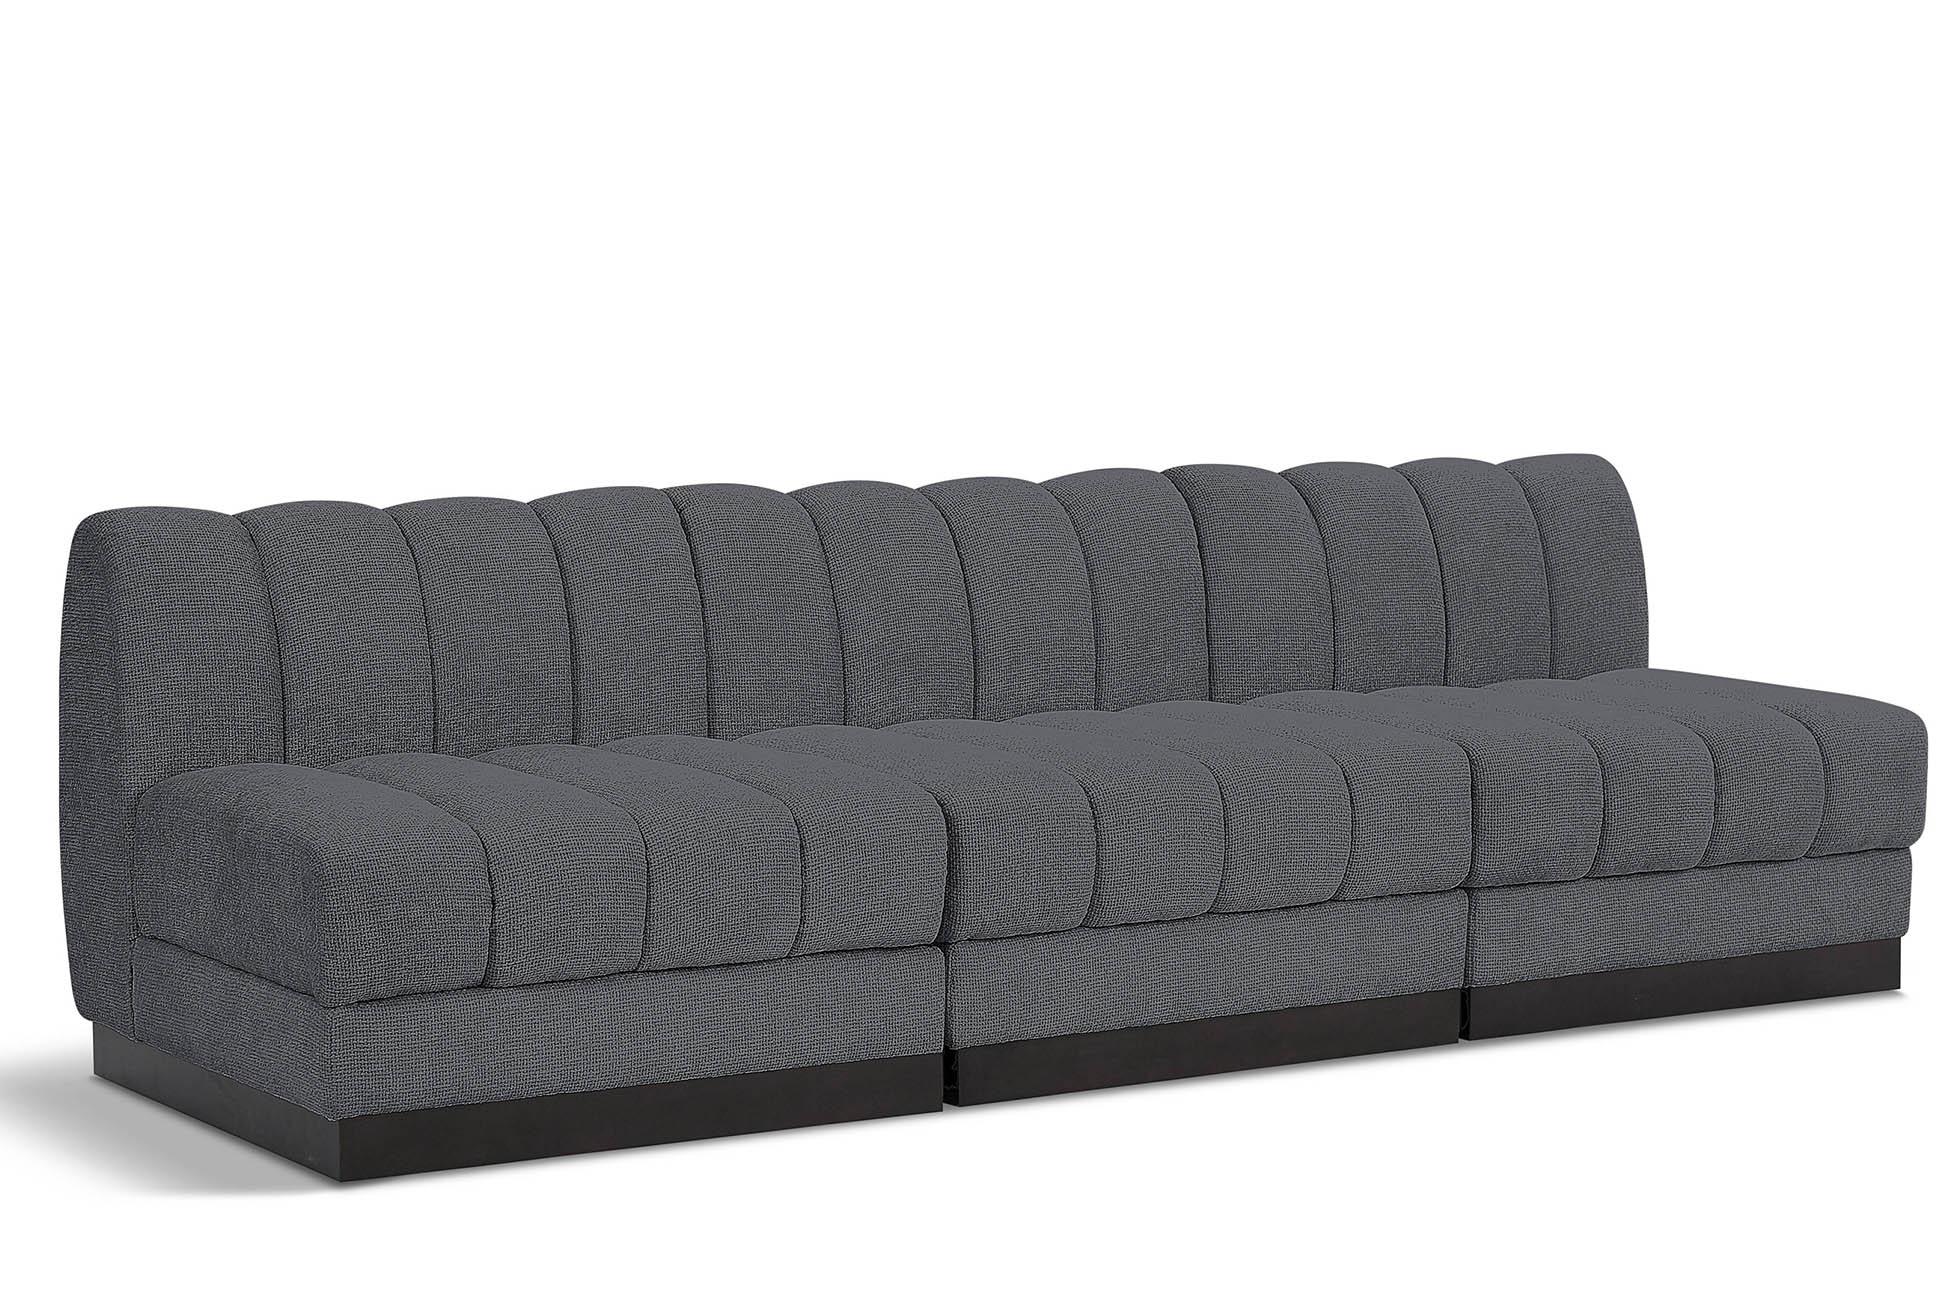 Contemporary, Modern Modular Sofa QUINN 124Grey-S96 124Grey-S96 in Gray Chenille